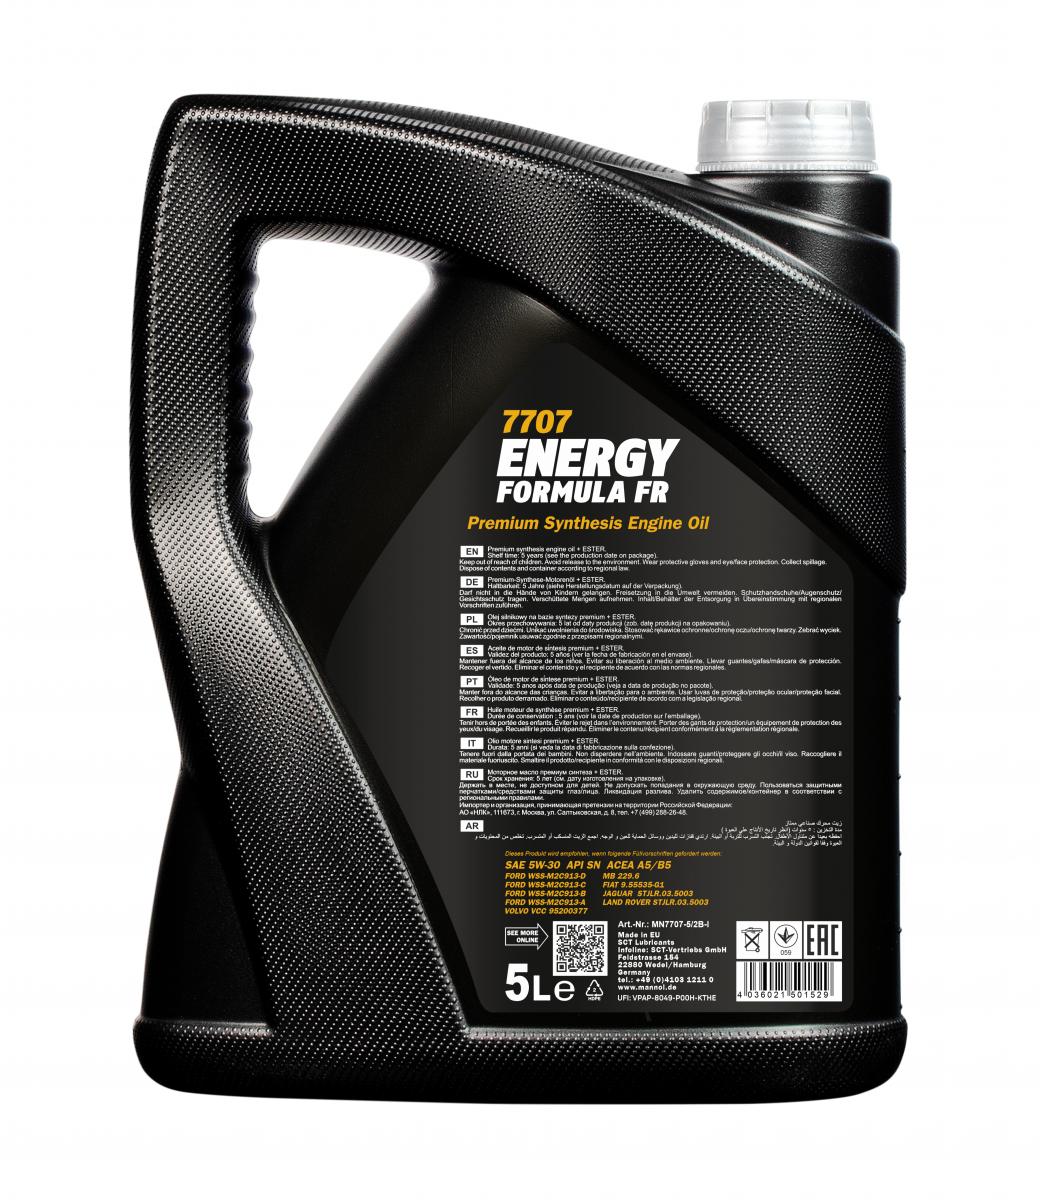 10 Liter (2x5) MANNOL Energy Formula FR 7707 5W-30 API SN ACEA A5/B5 Motoröl